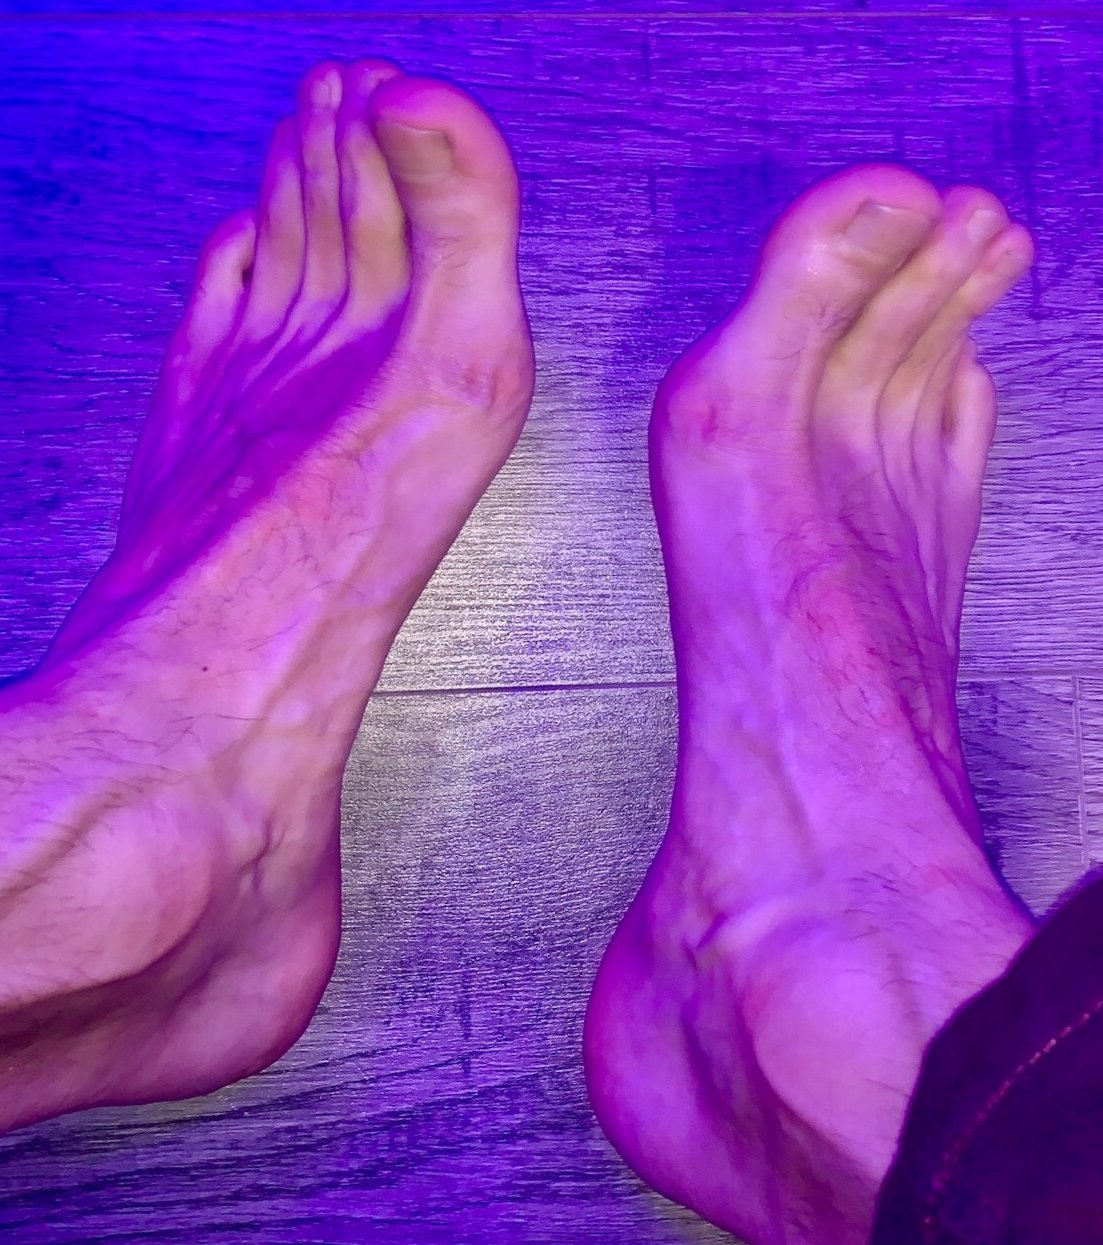 Sexiest Porn Star Feet - mforst80 22K+ on Twitter: \